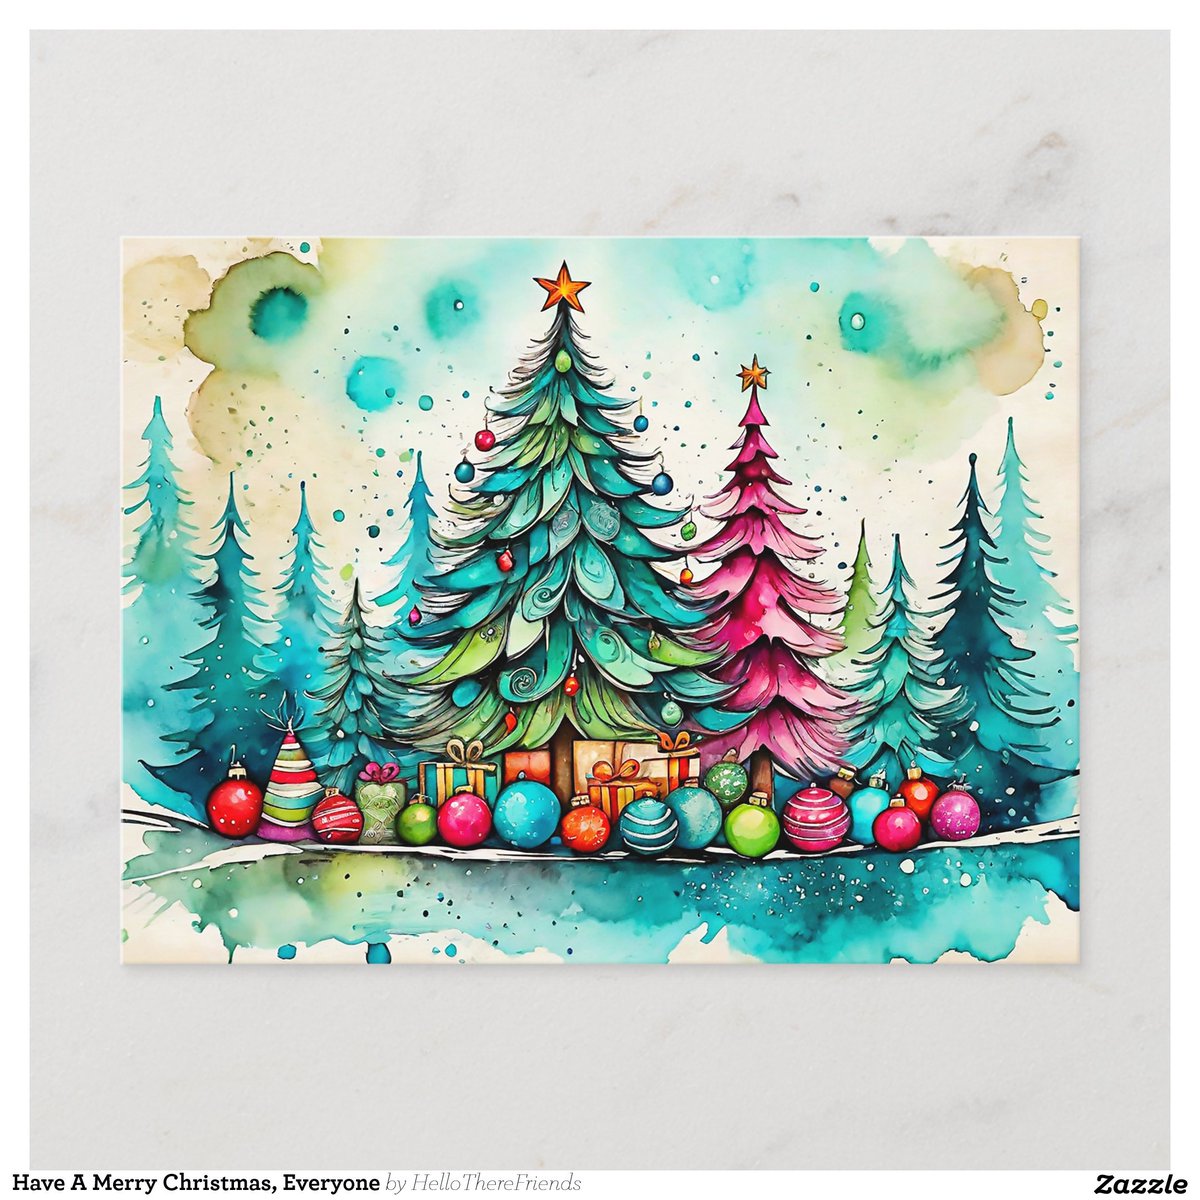 Have A Merry Christmas, Everyone Postcard→zazzle.com/z/avx6hvye?rf=…

#Postcards #ChristmasPostcards #MerryChristmas #HappyHolidays #SeasonsGreetings #TisTheSeasons #ChristmasHoliday #Holidays #Xmas #Zazzle